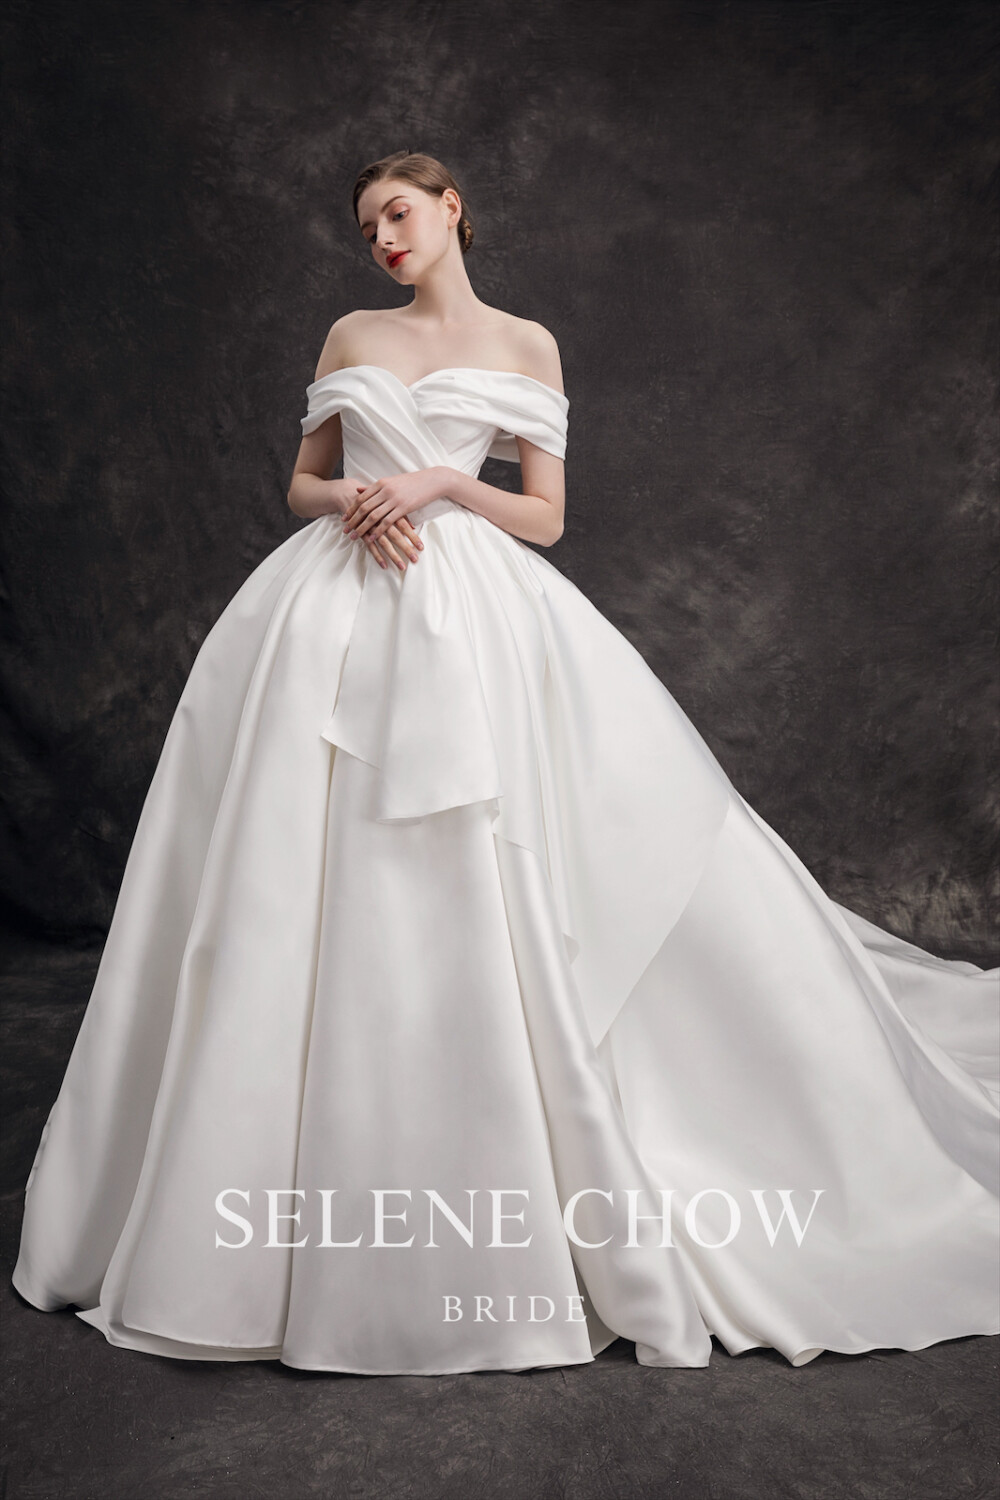 SELENE CHOW 婚纱礼服，图源微博cr：@设计师Selene Chow